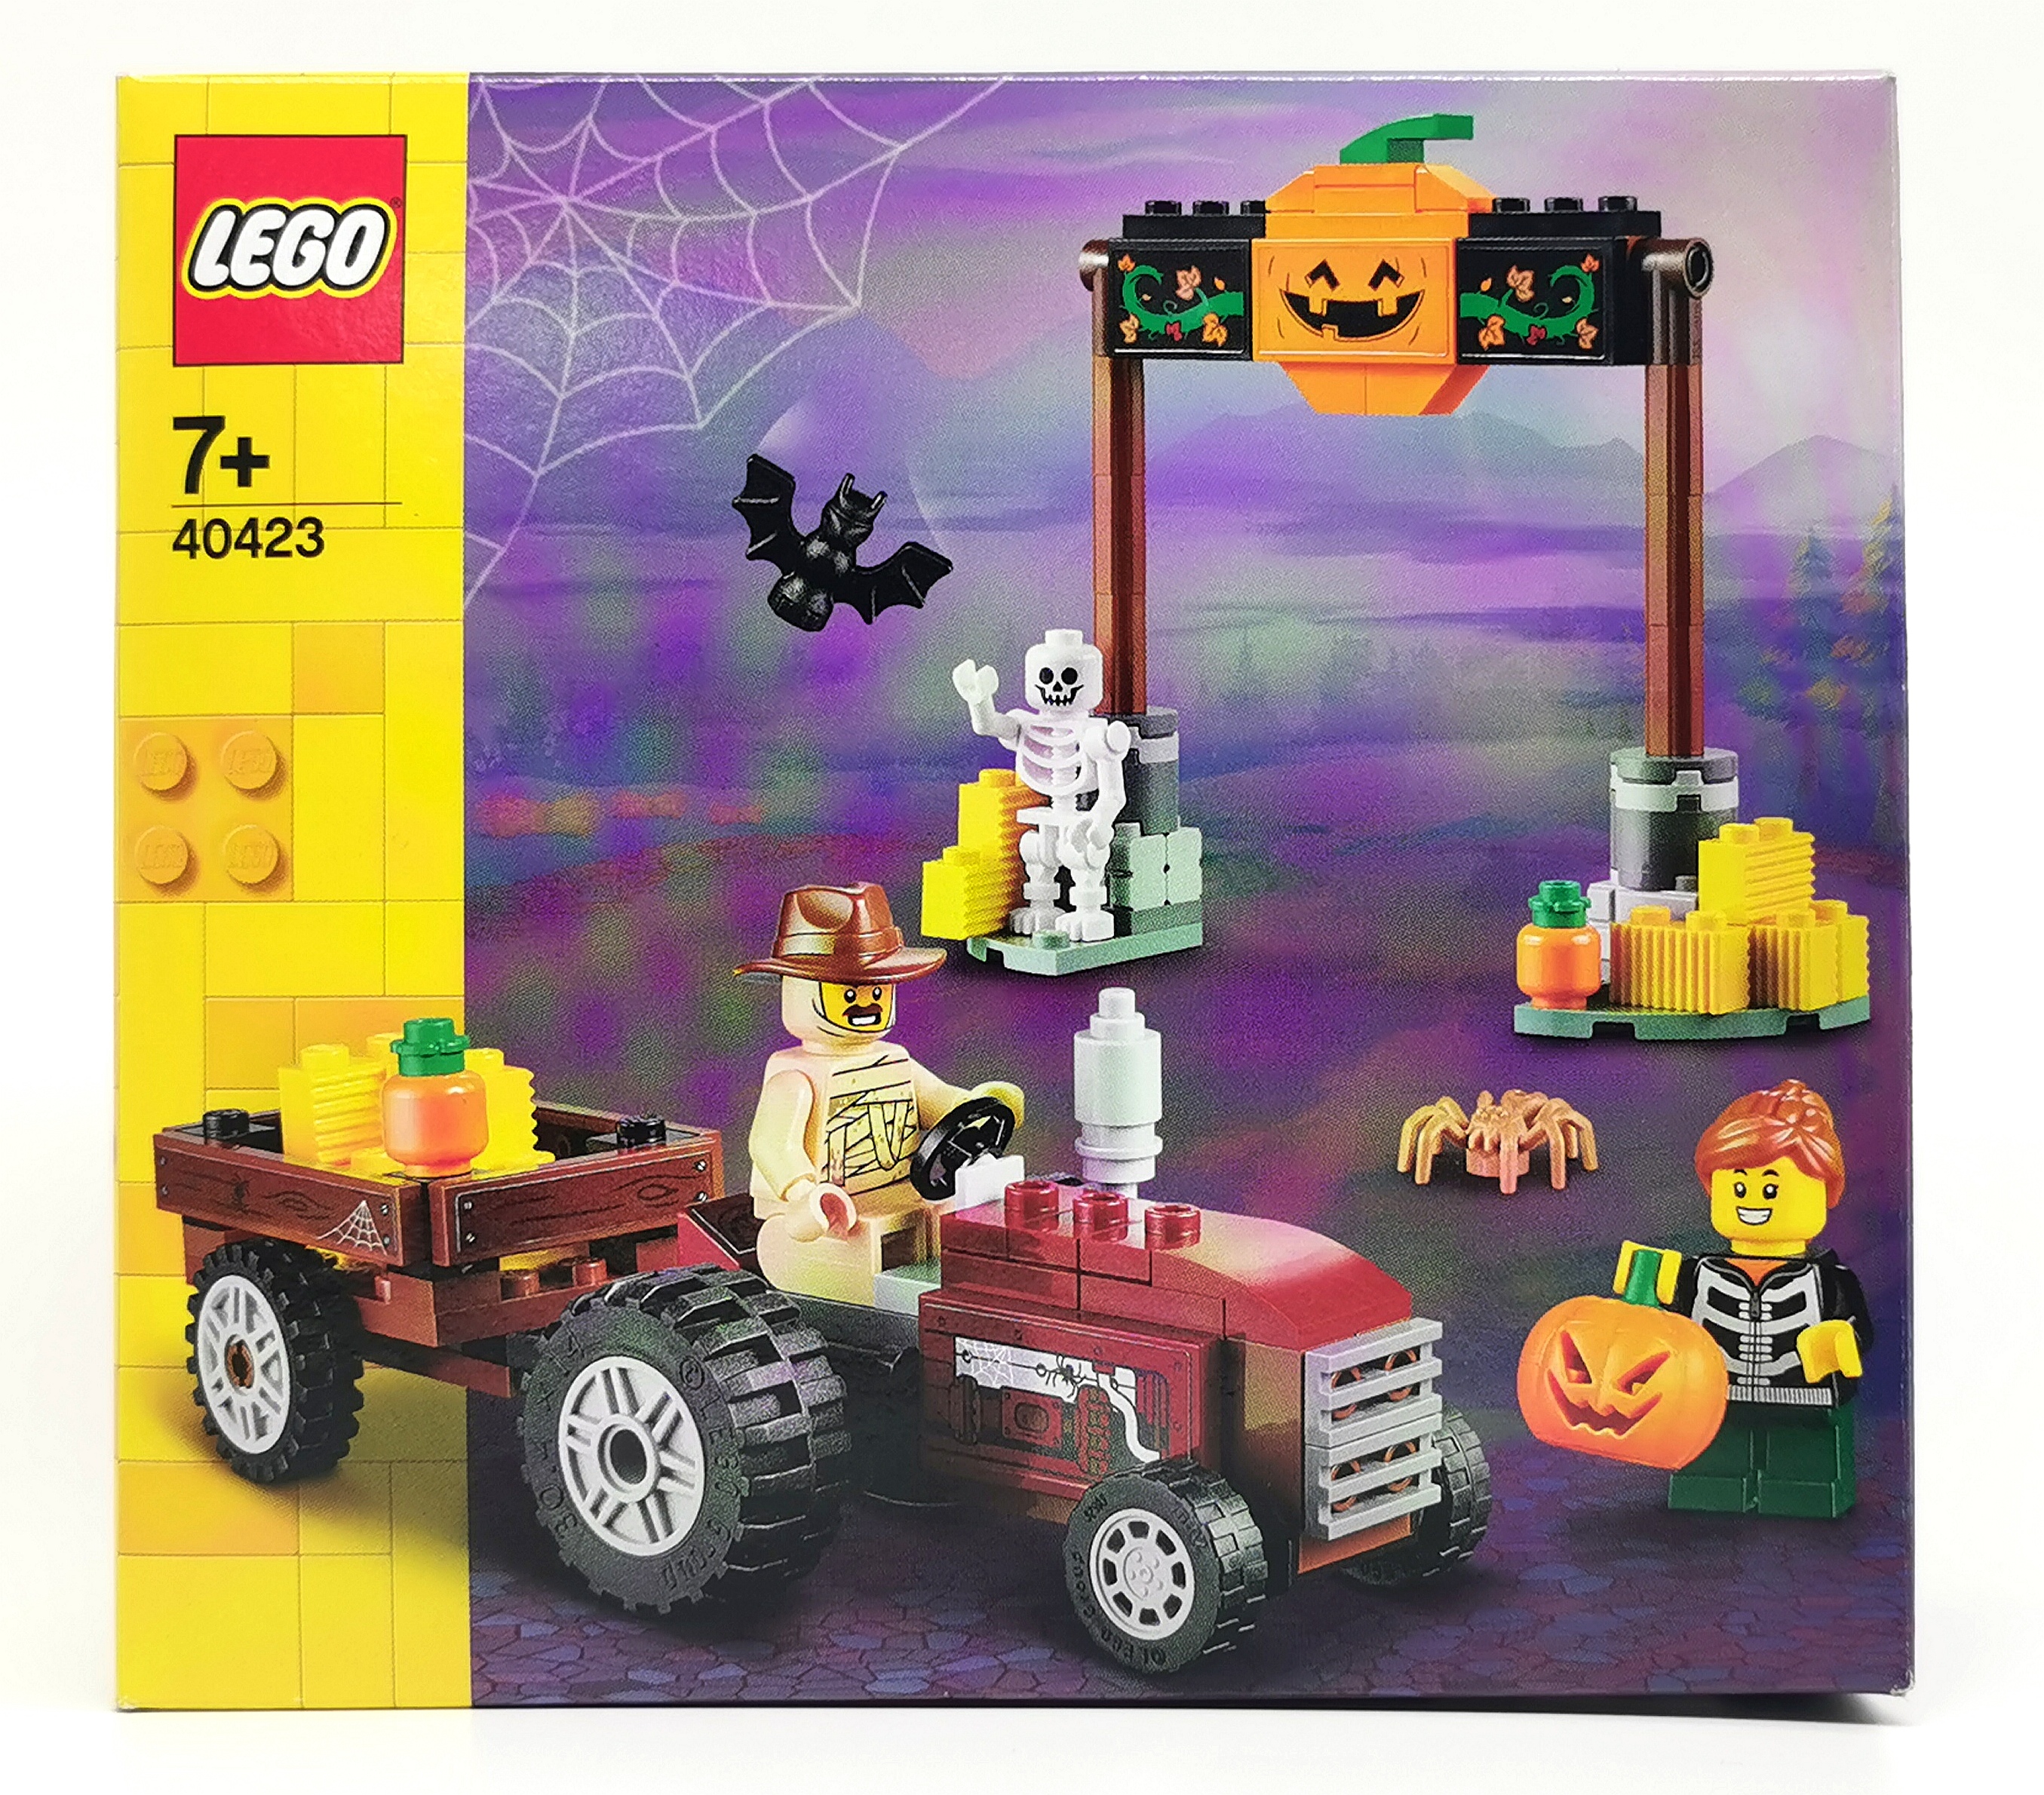 LEGO Halloween Hayride 40423! The Brick Post!